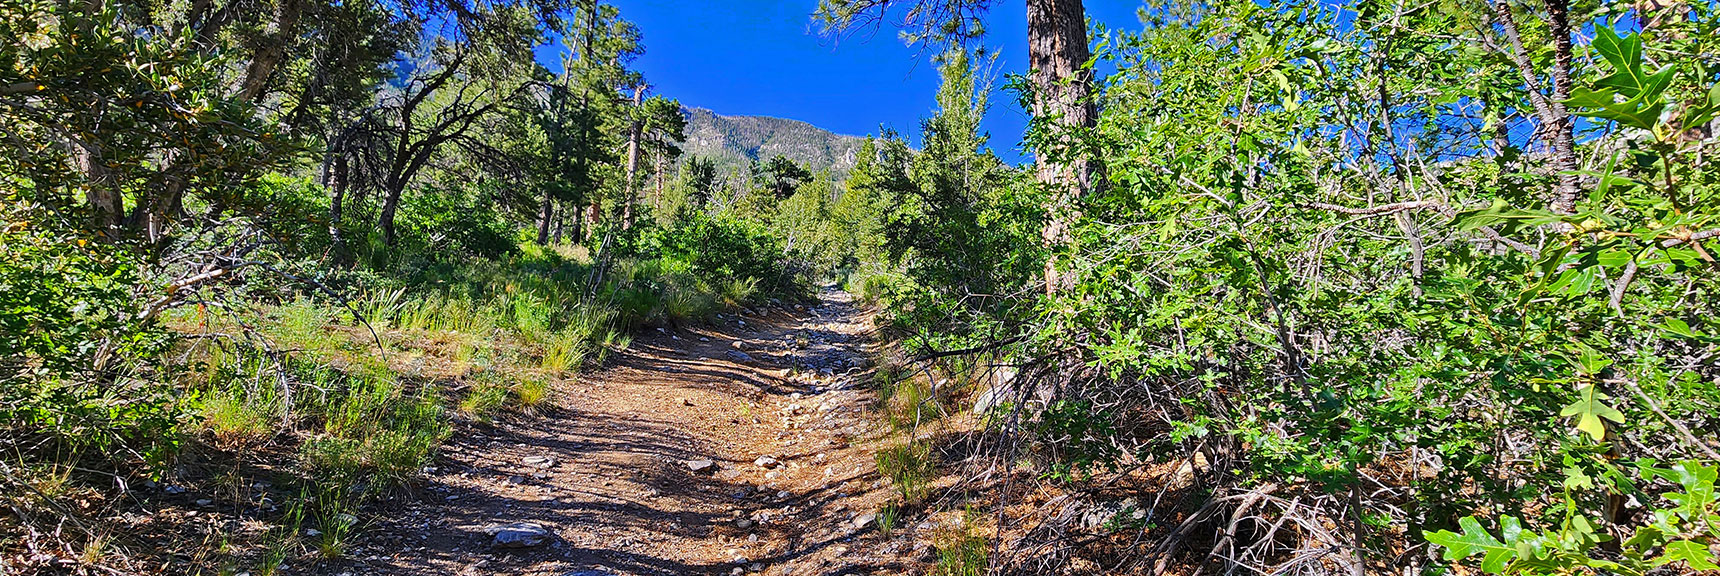 Continue Upward on Maintenance Road Through Lower Forested Area | Fletcher View Ridge | Mt Charleston Wilderness, Nevada